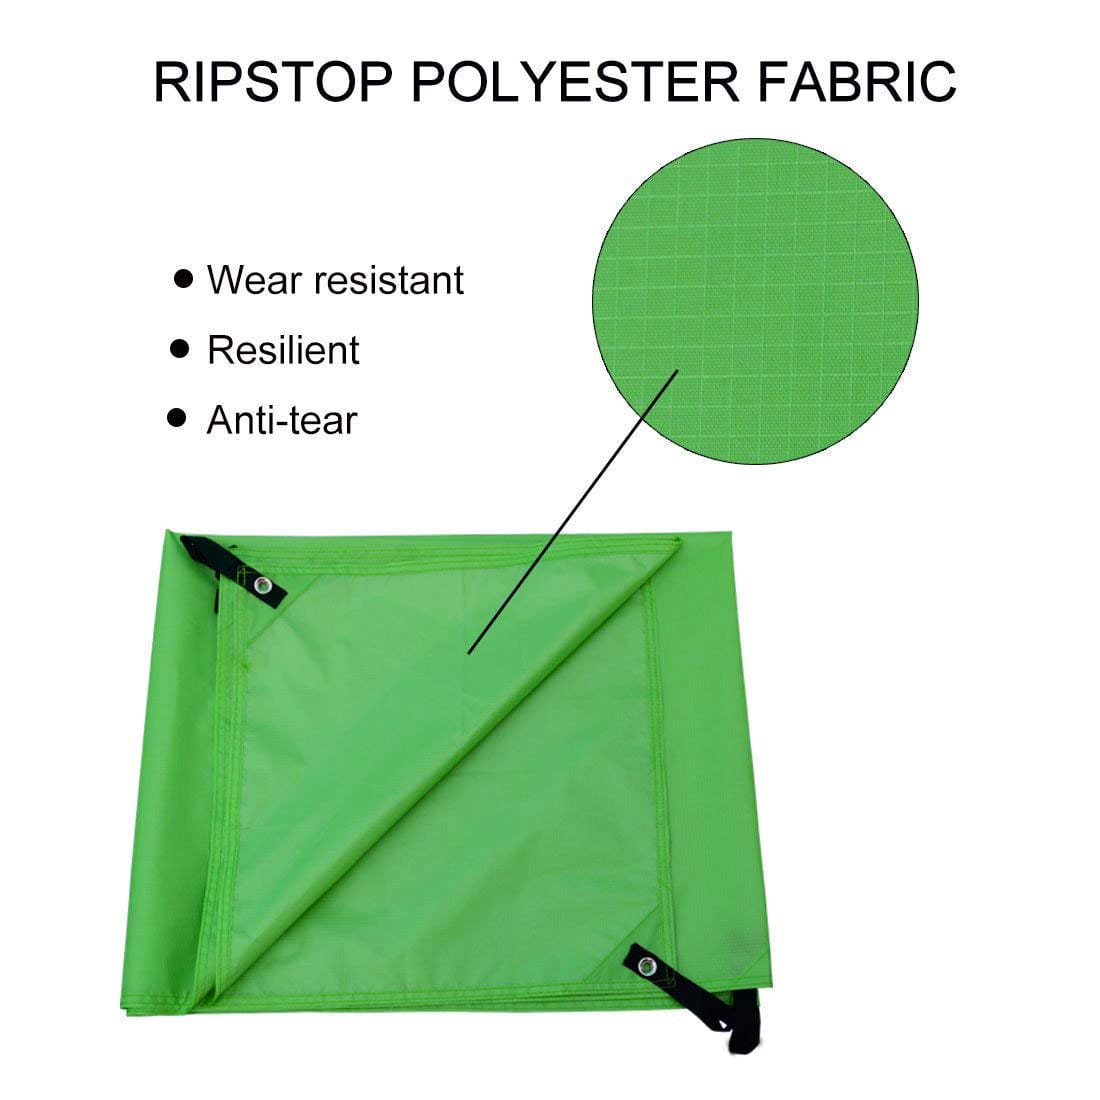 Is Polyester Waterproof? 